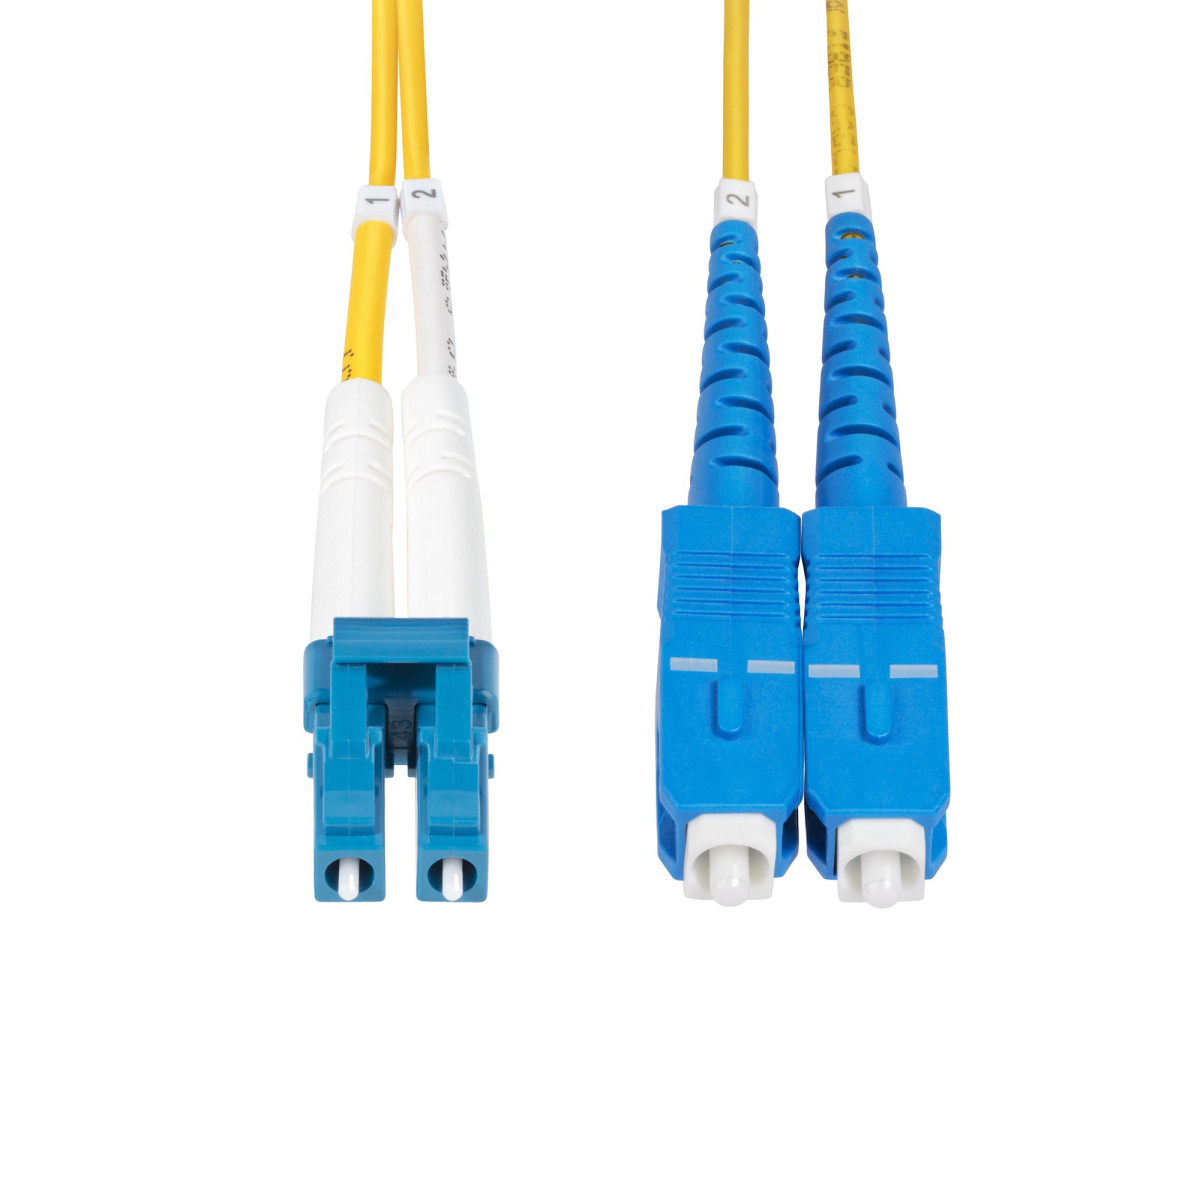 30m LC/SC OS2 Single Mode Fiber Cable